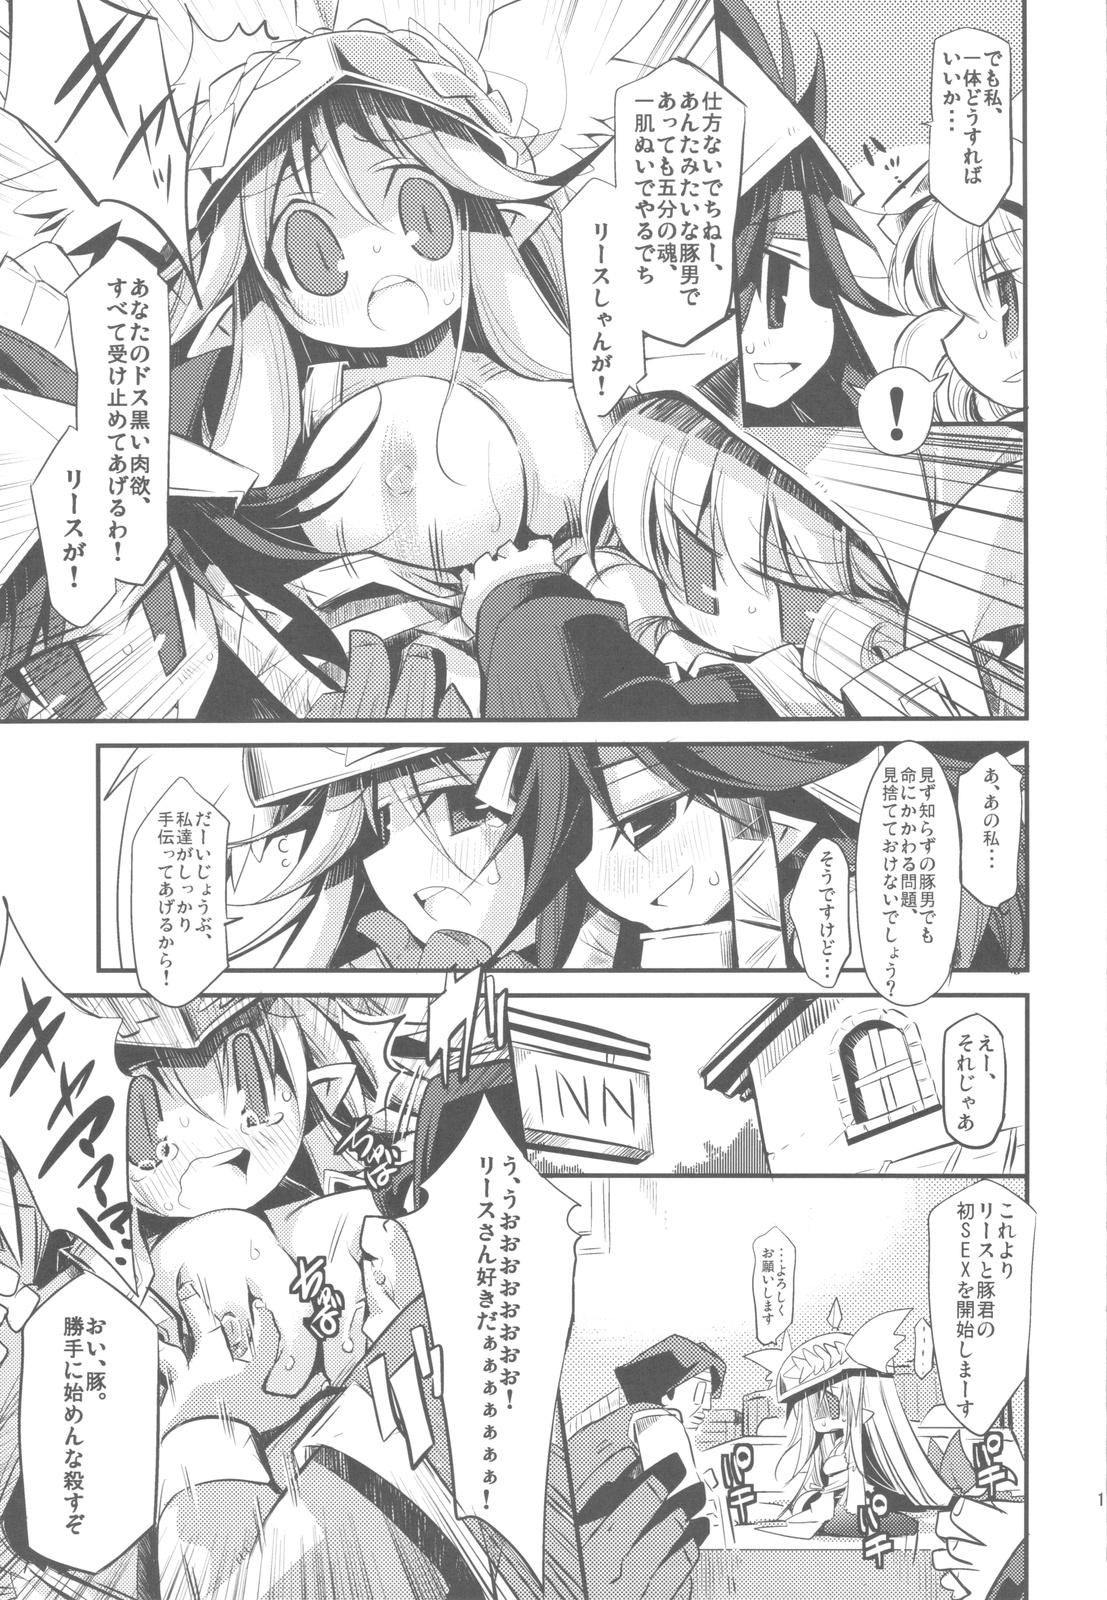 Hoe noblesse oblige 2 - Seiken densetsu 3 Story - Page 10